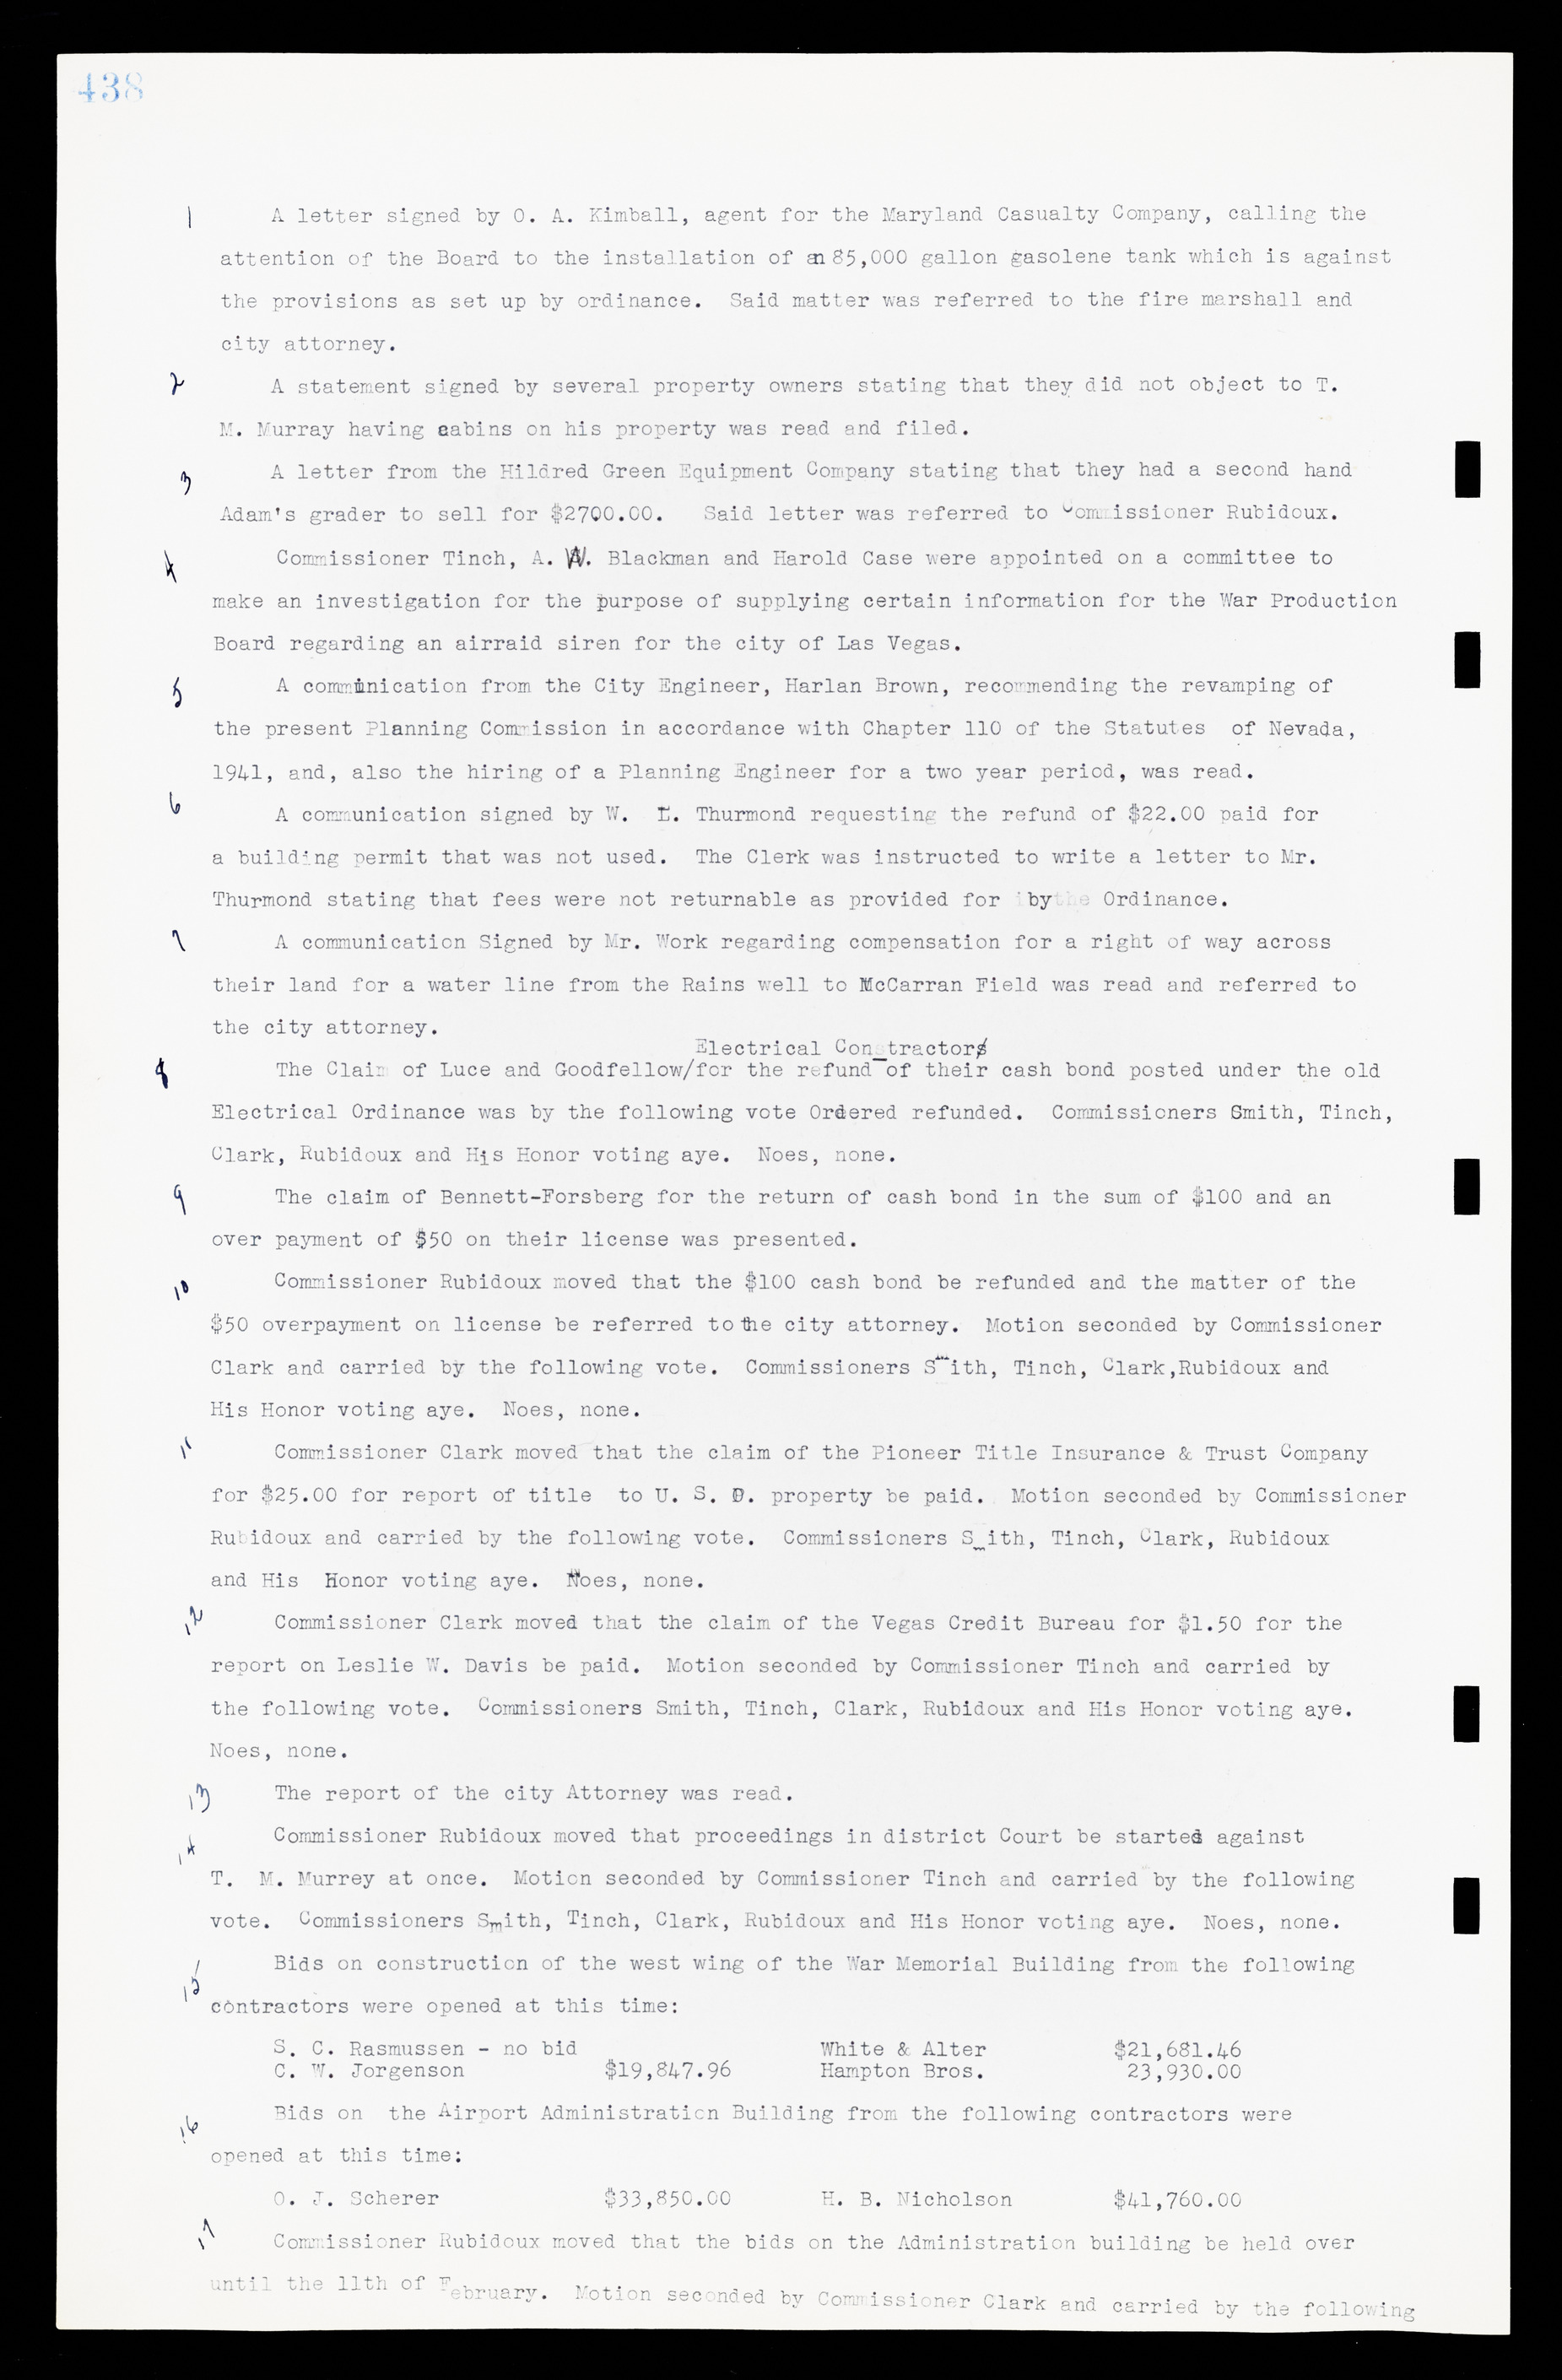 Las Vegas City Commission Minutes, February 17, 1937 to August 4, 1942, lvc000004-466